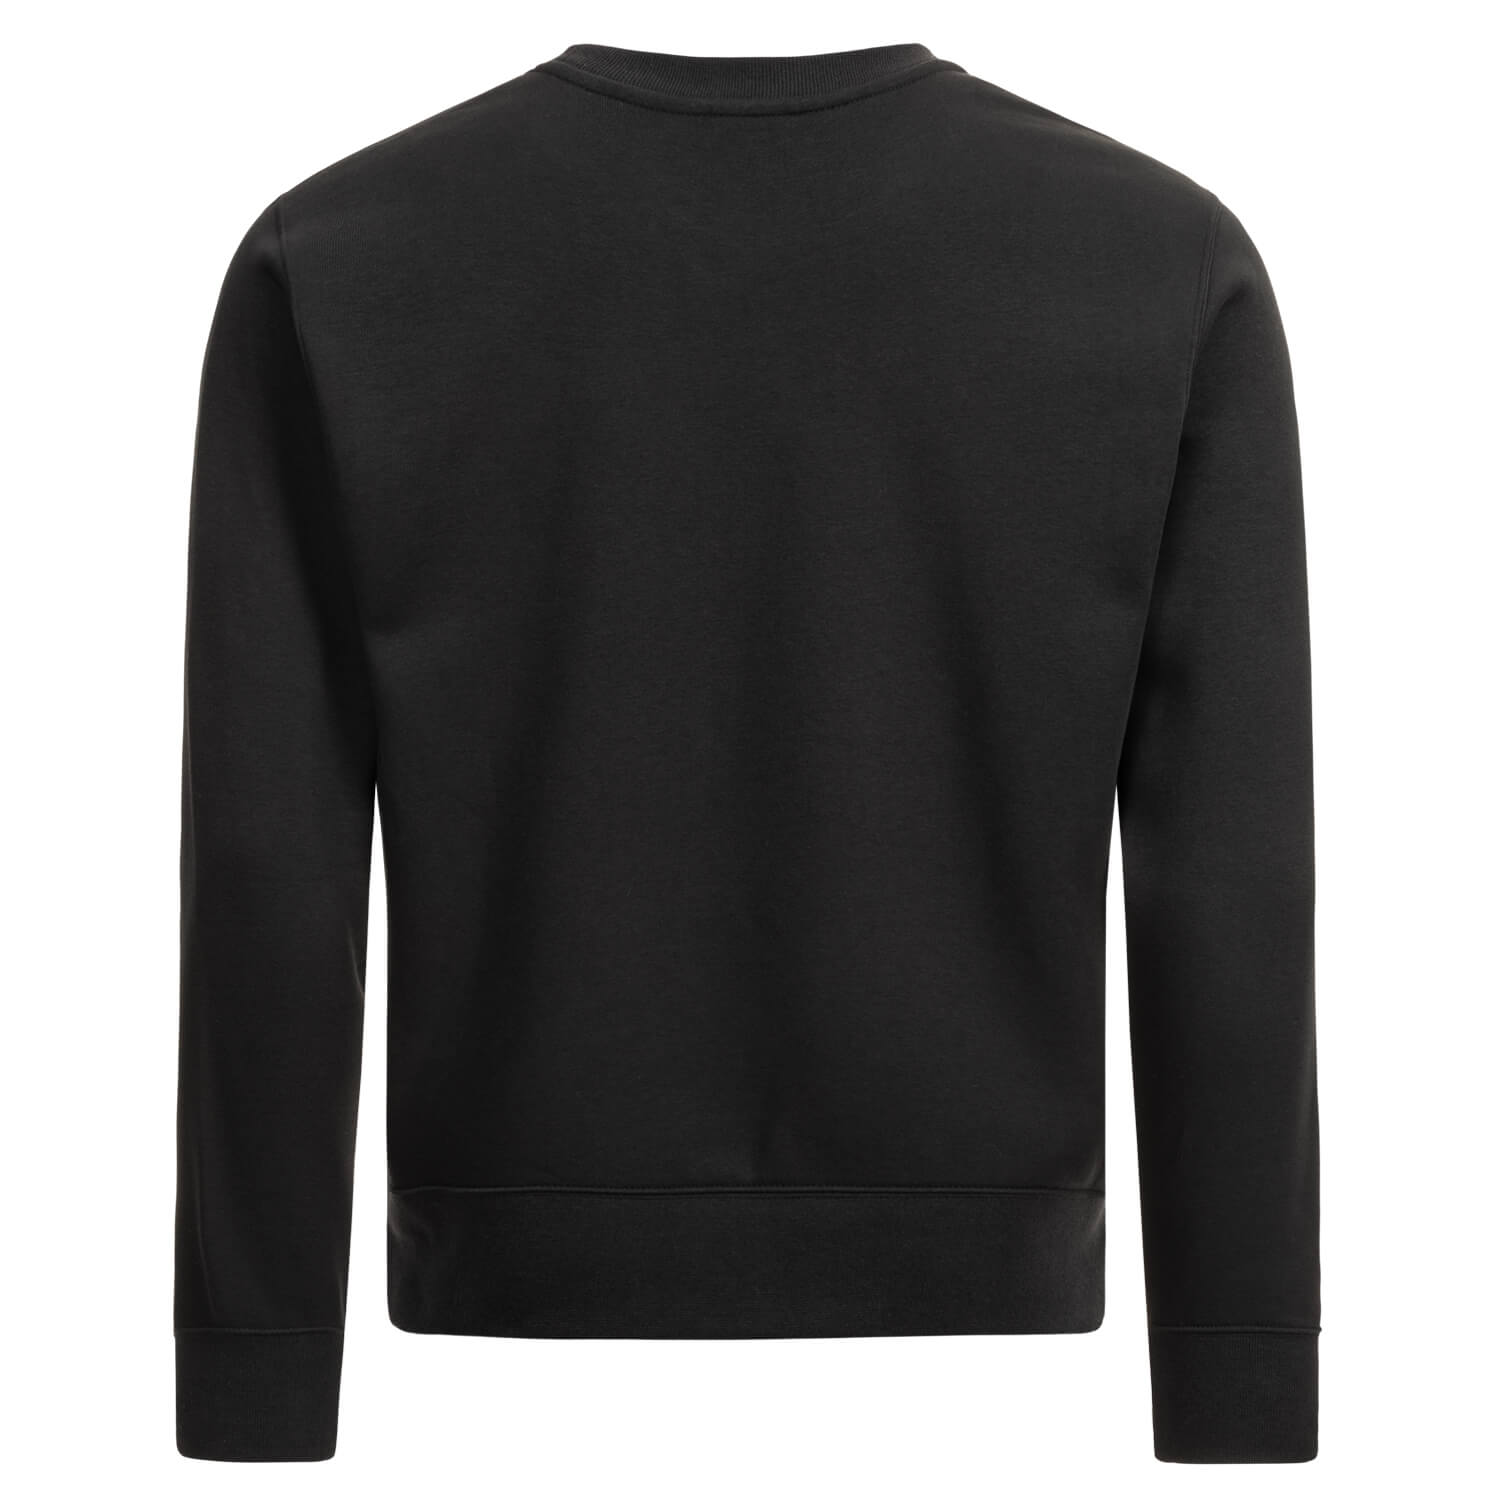 Bild 3: Nike Sweater Basic schwarz